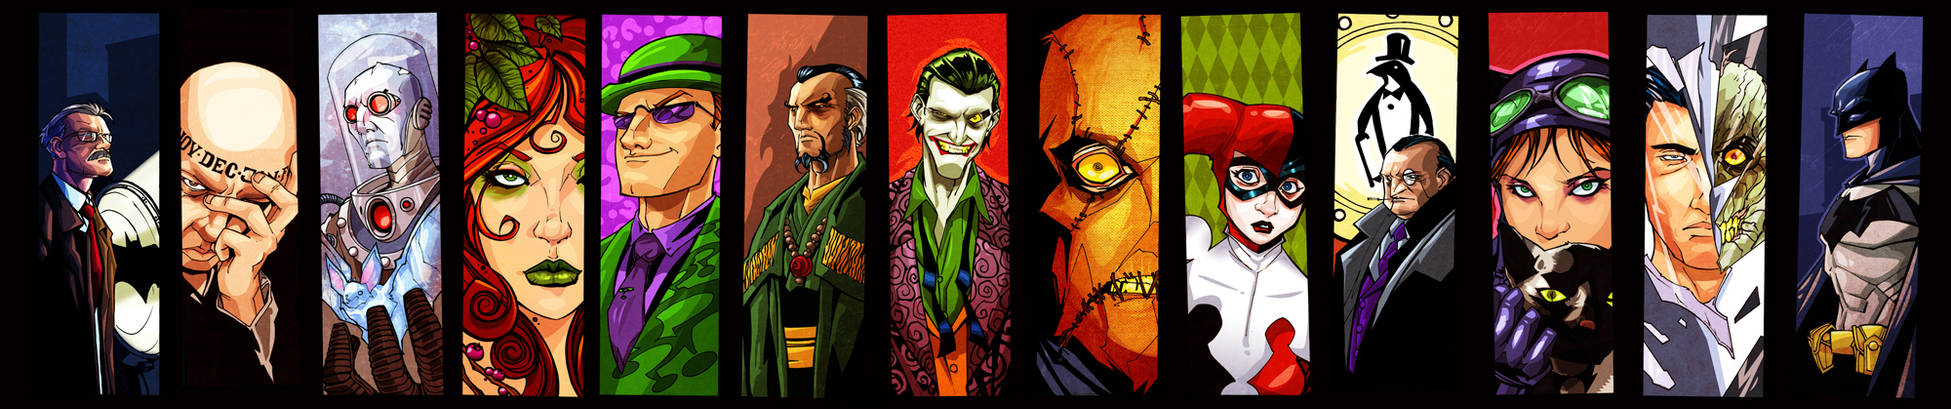 Gotham Icons: Complete set.